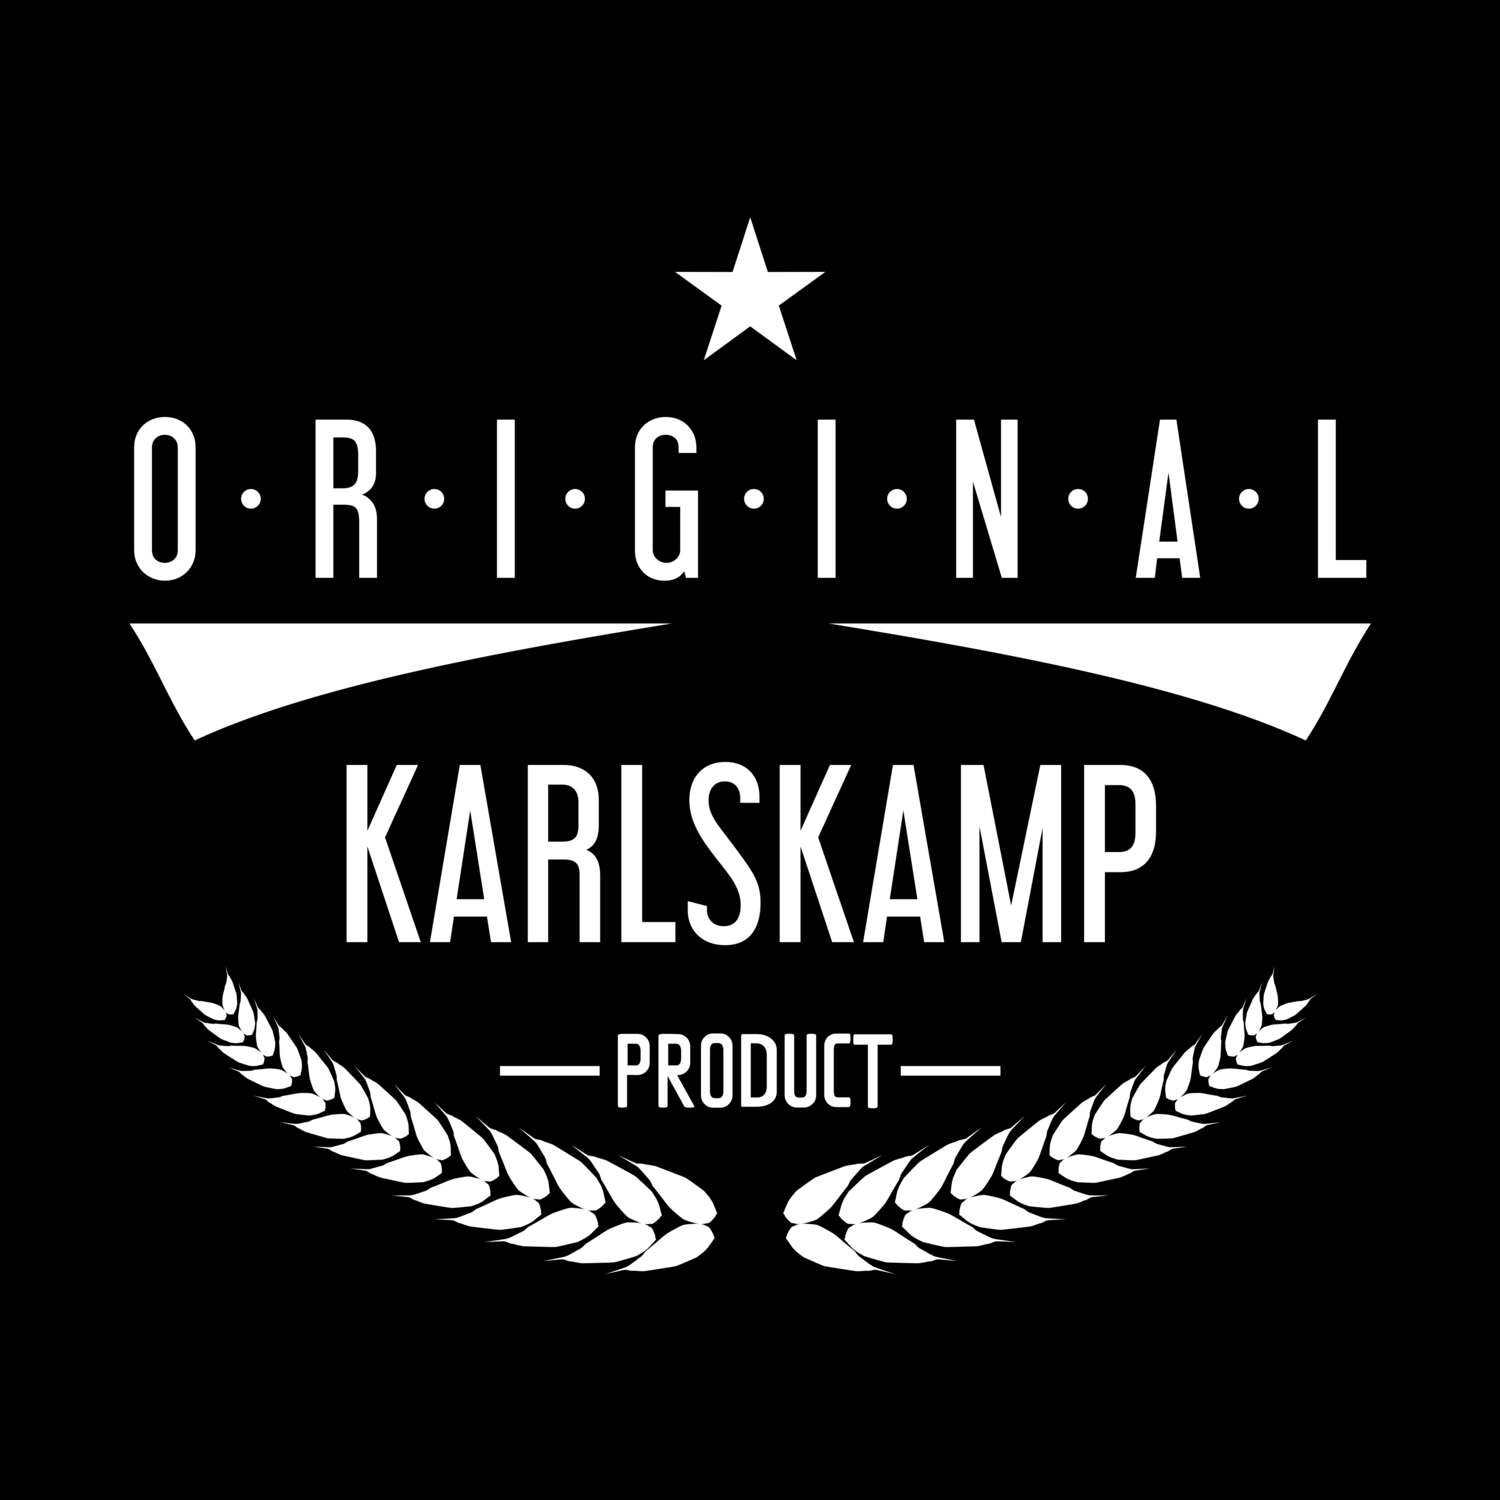 Karlskamp T-Shirt »Original Product«